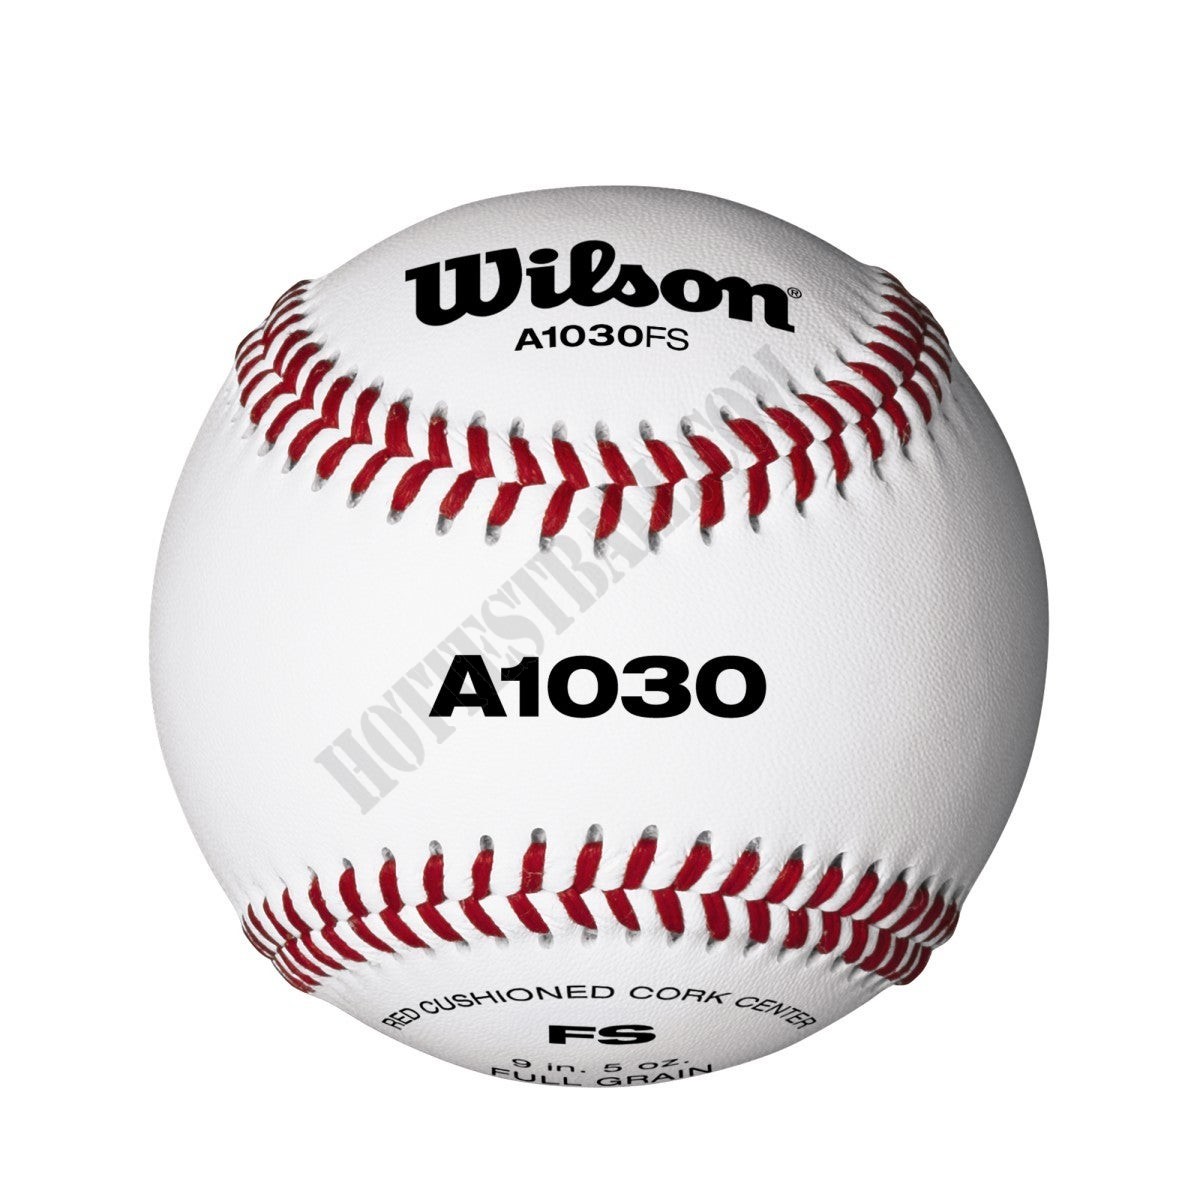 A1030 Champion Series Flat Seam Baseballs - Wilson Discount Store - A1030 Champion Series Flat Seam Baseballs - Wilson Discount Store